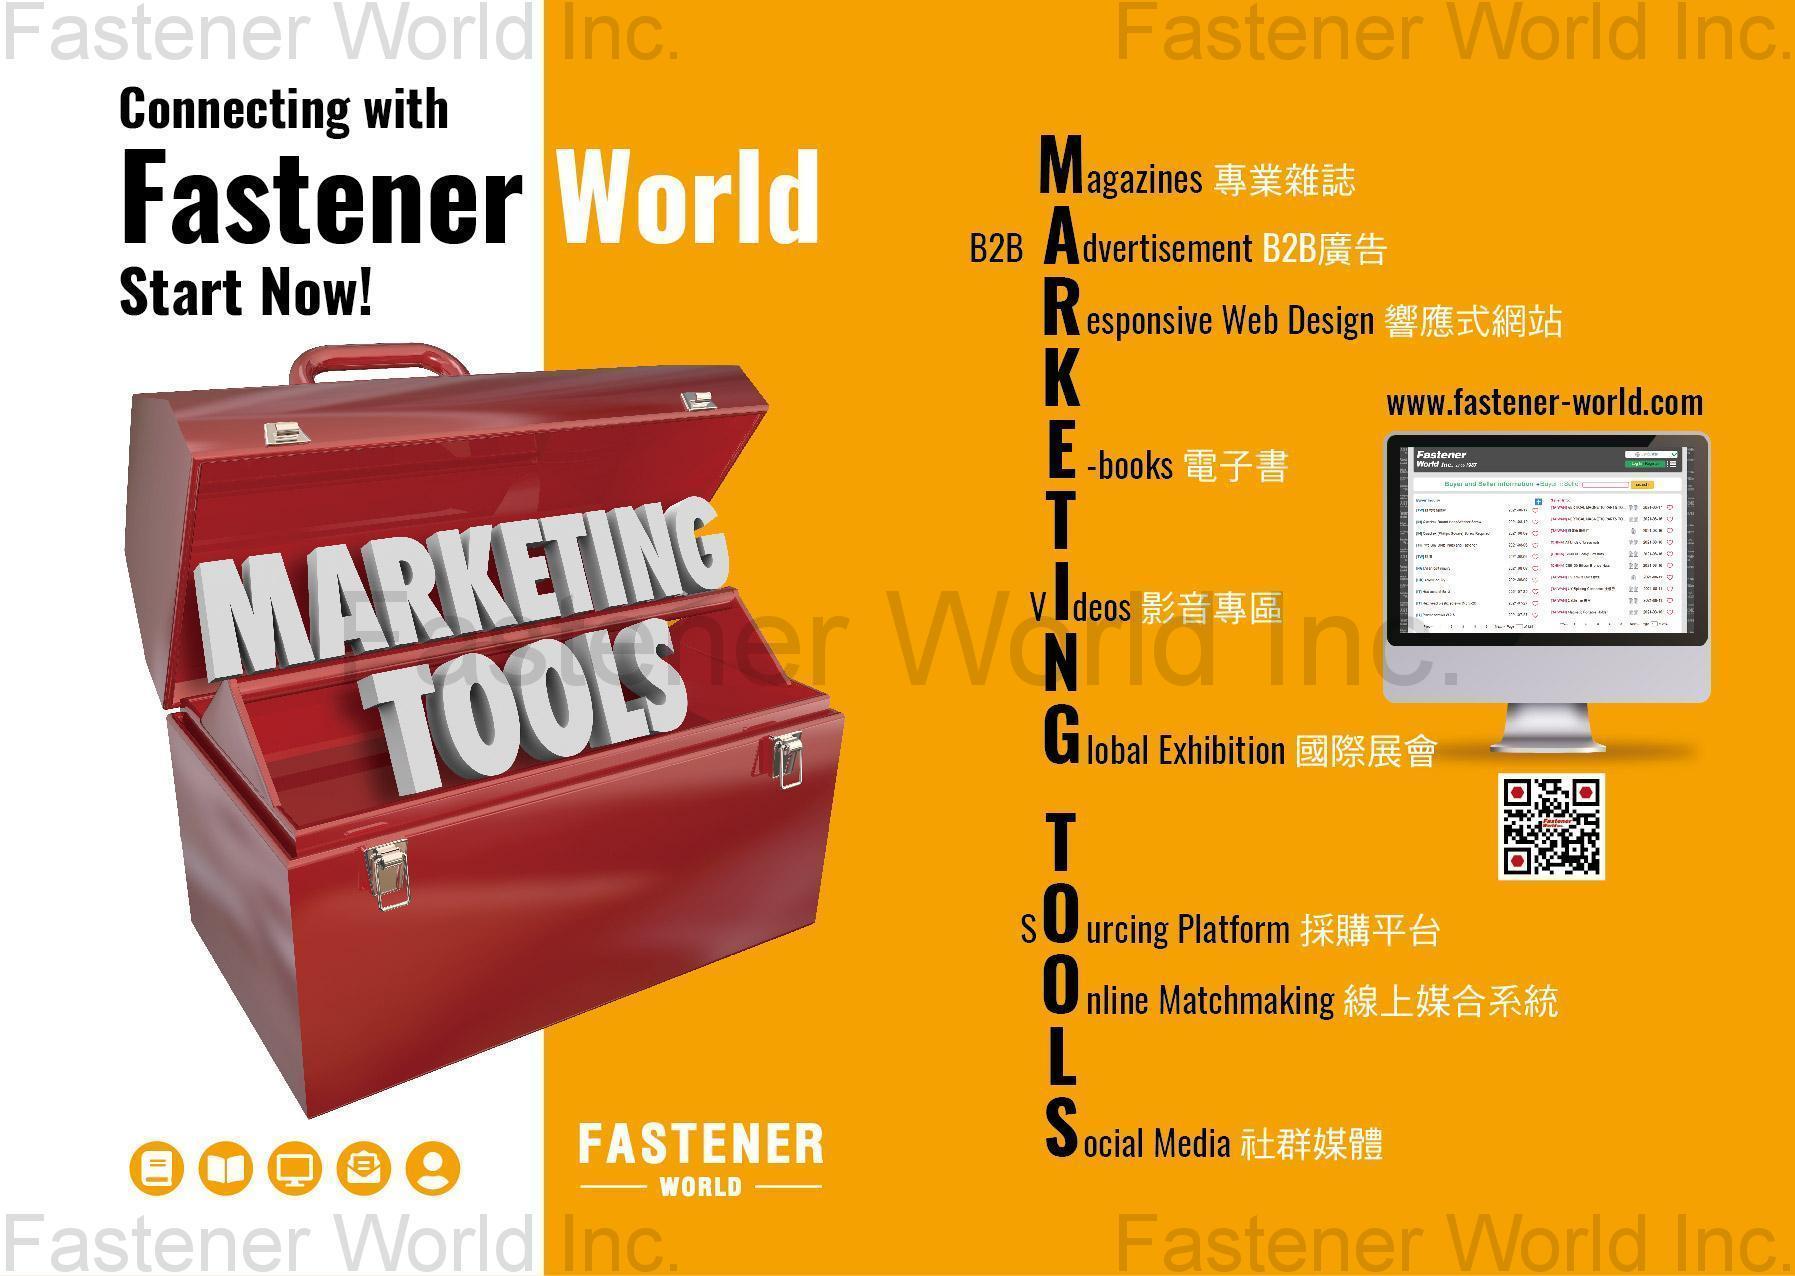 FASTENER WORLD INC. , Fastener World Magazine, B2B Advertisement, Responsive Web Design, E-Book, Videos, Global Exhibition, Ourcing Platform, Online Matchmaking, Social Media